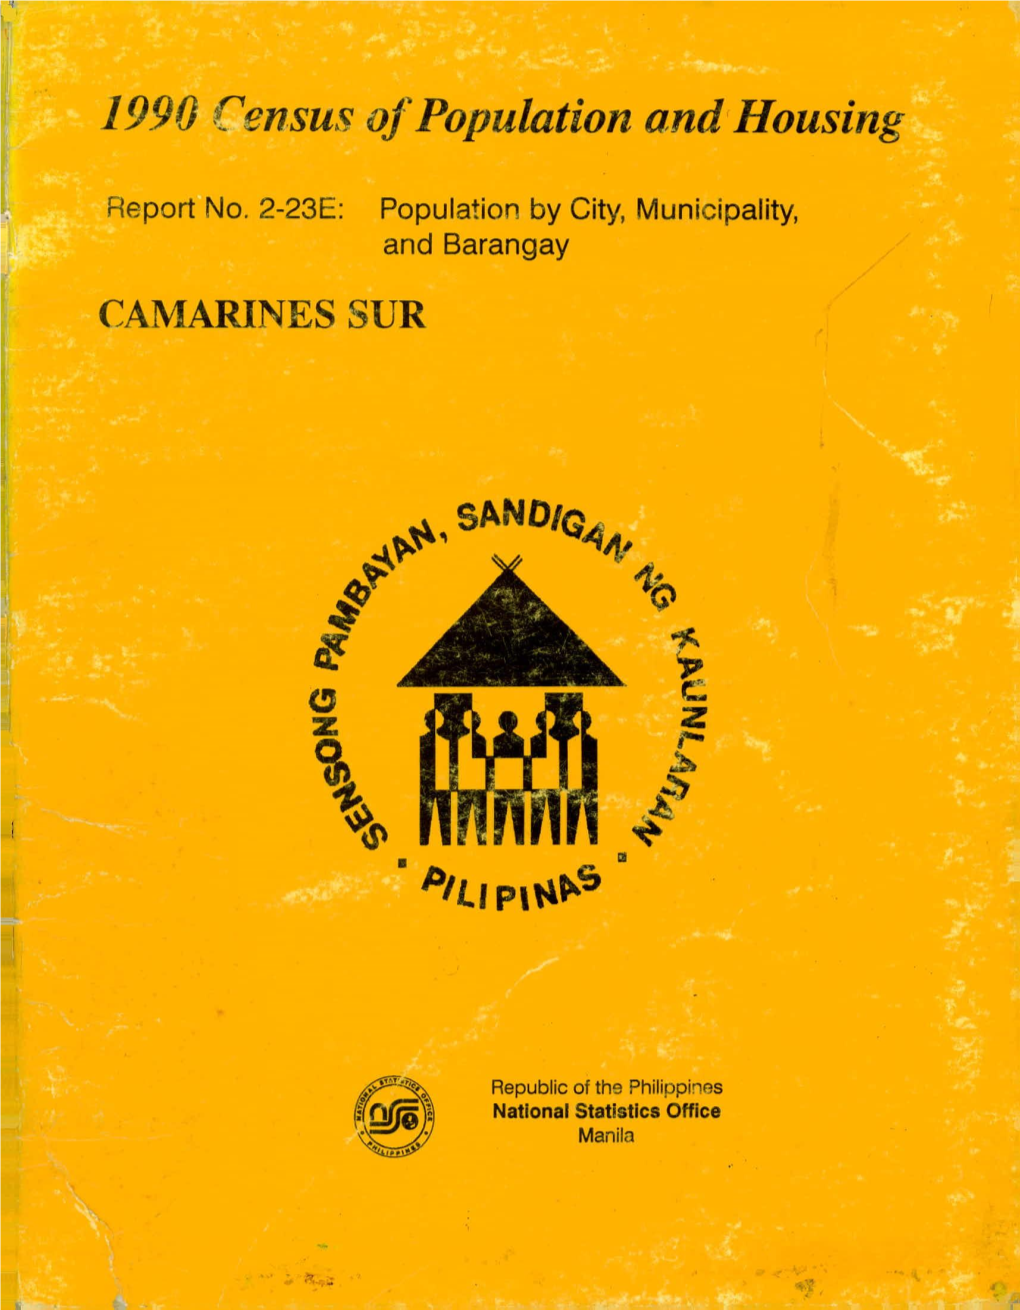 Camarines Sur), Population by City, Municipality and Barangay